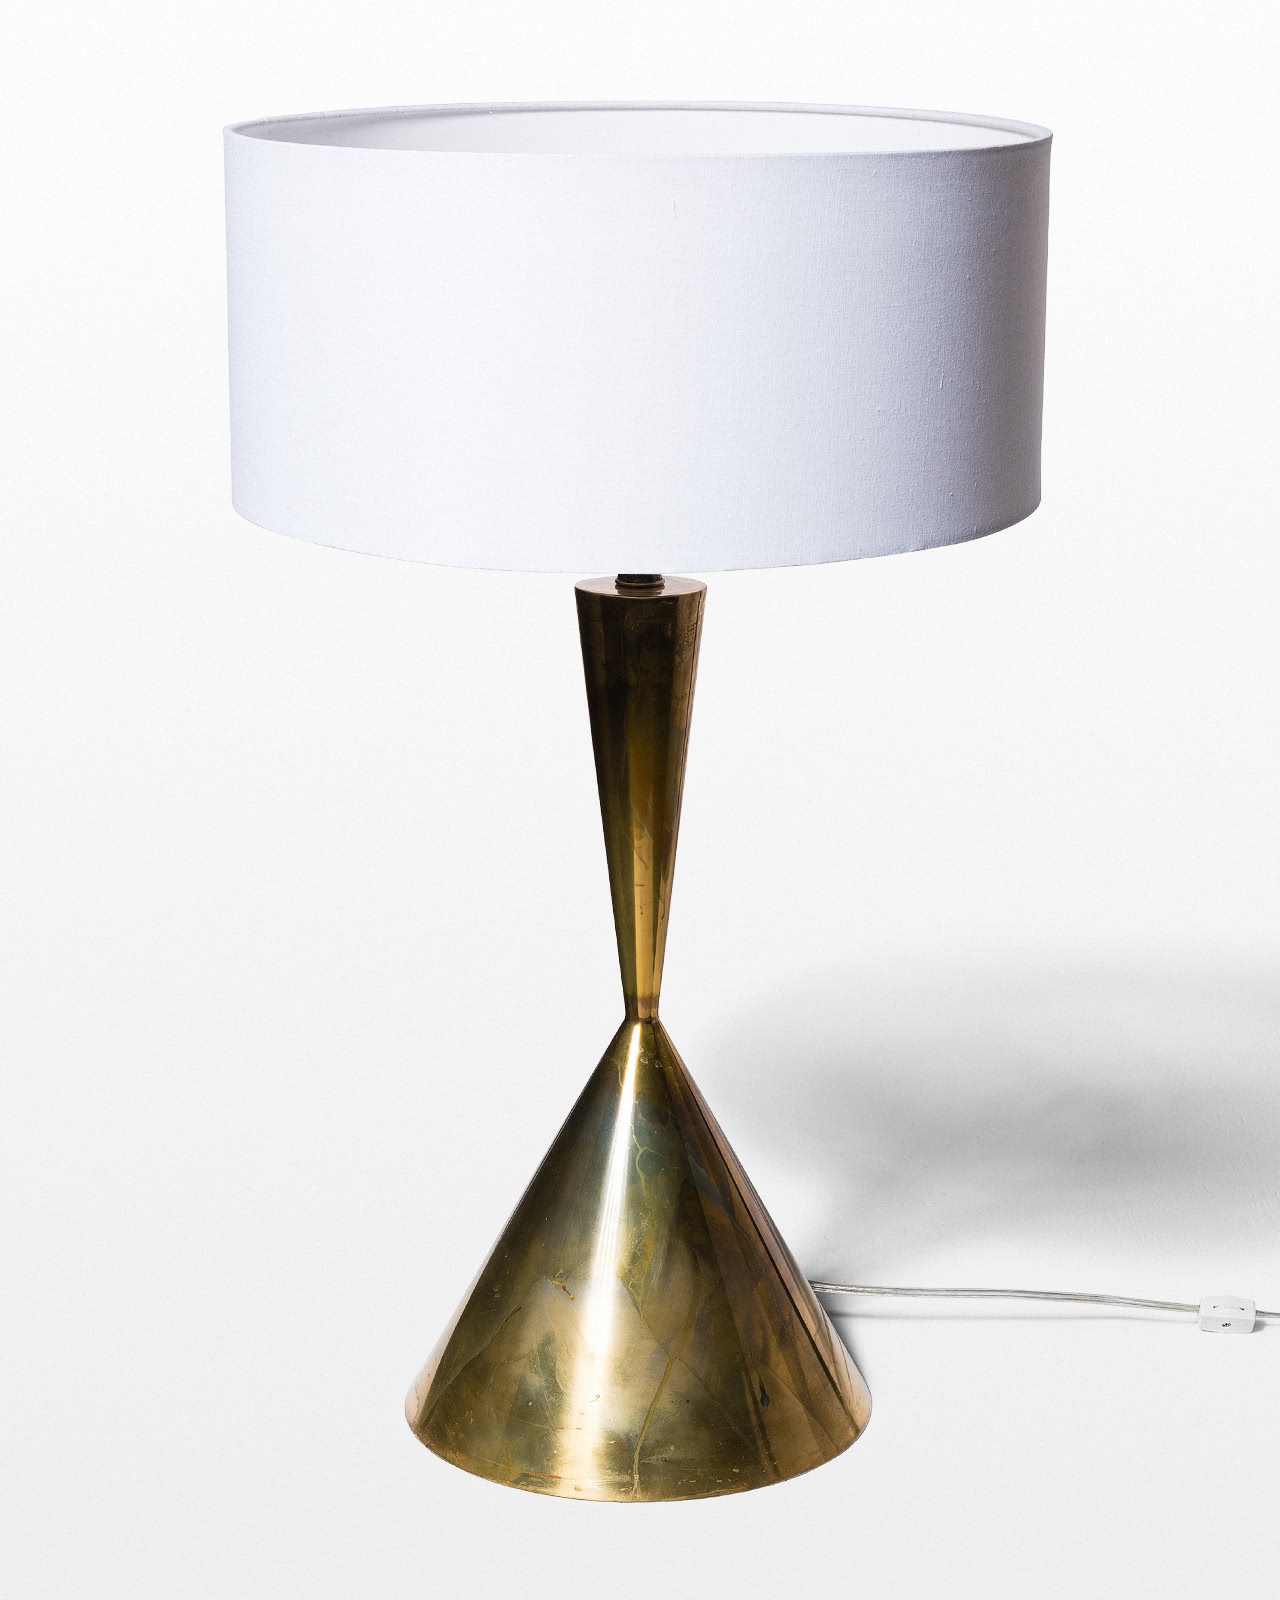 Lt194 Jacar Brass Totem Table Lamp Prop, Brooklyn Brass Table Lamp